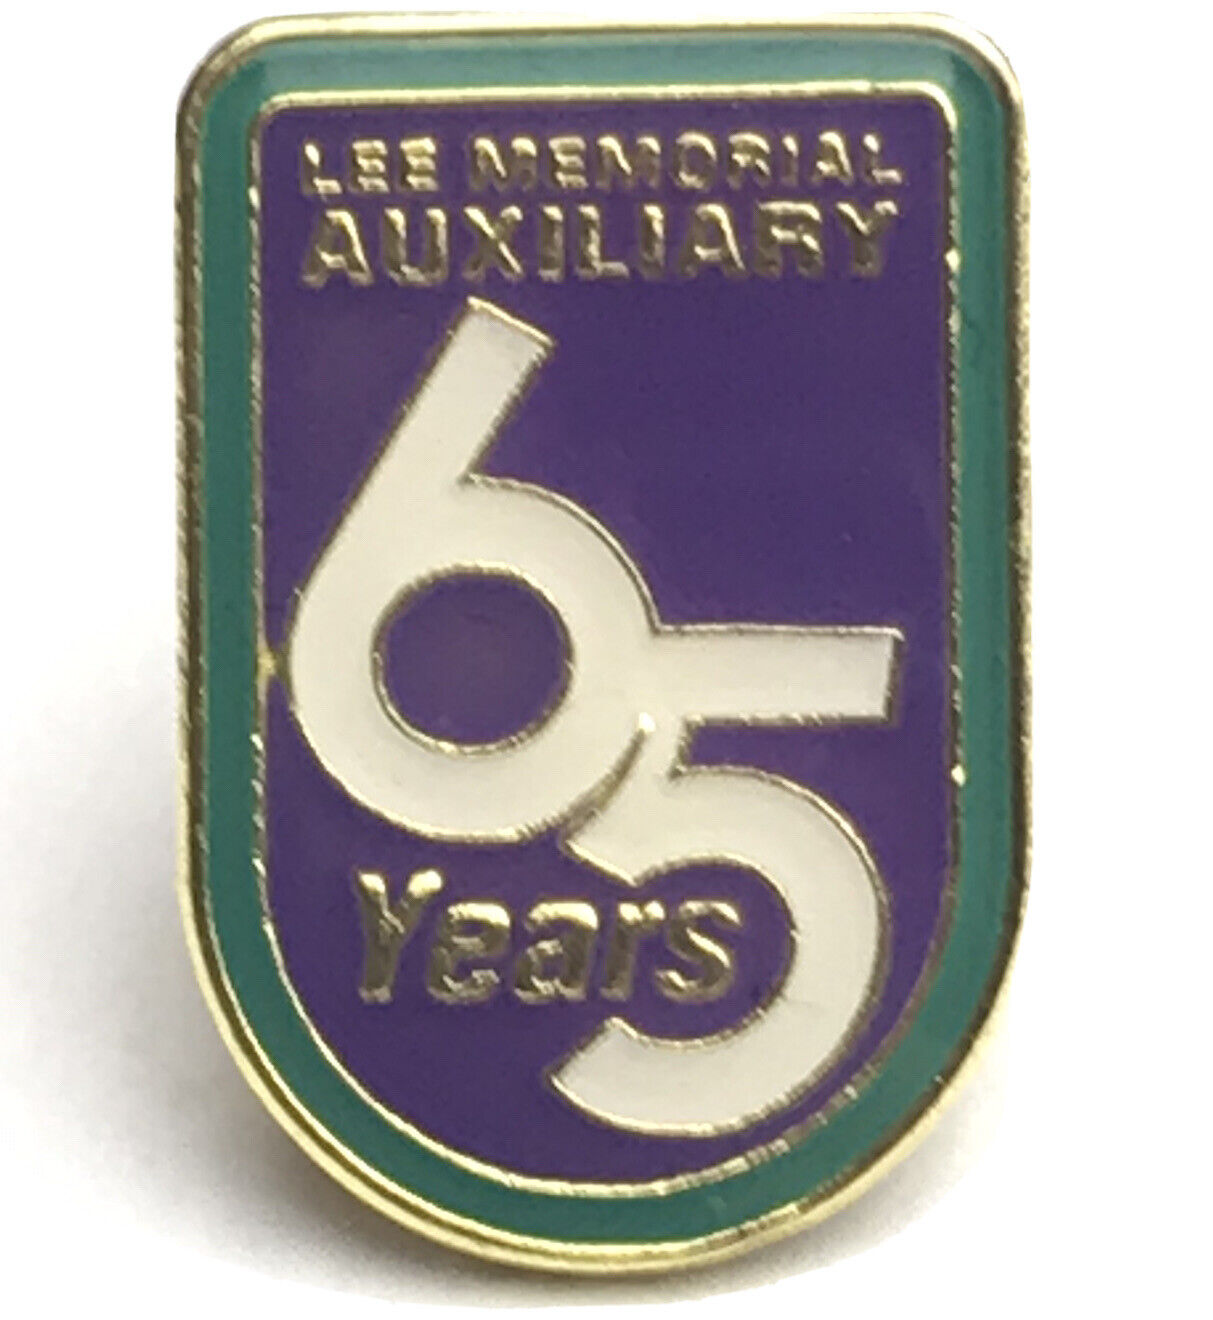 Lee Memorial Auxiliary 65 Years Vintage Pin Gold Tone Enamel Purple Green